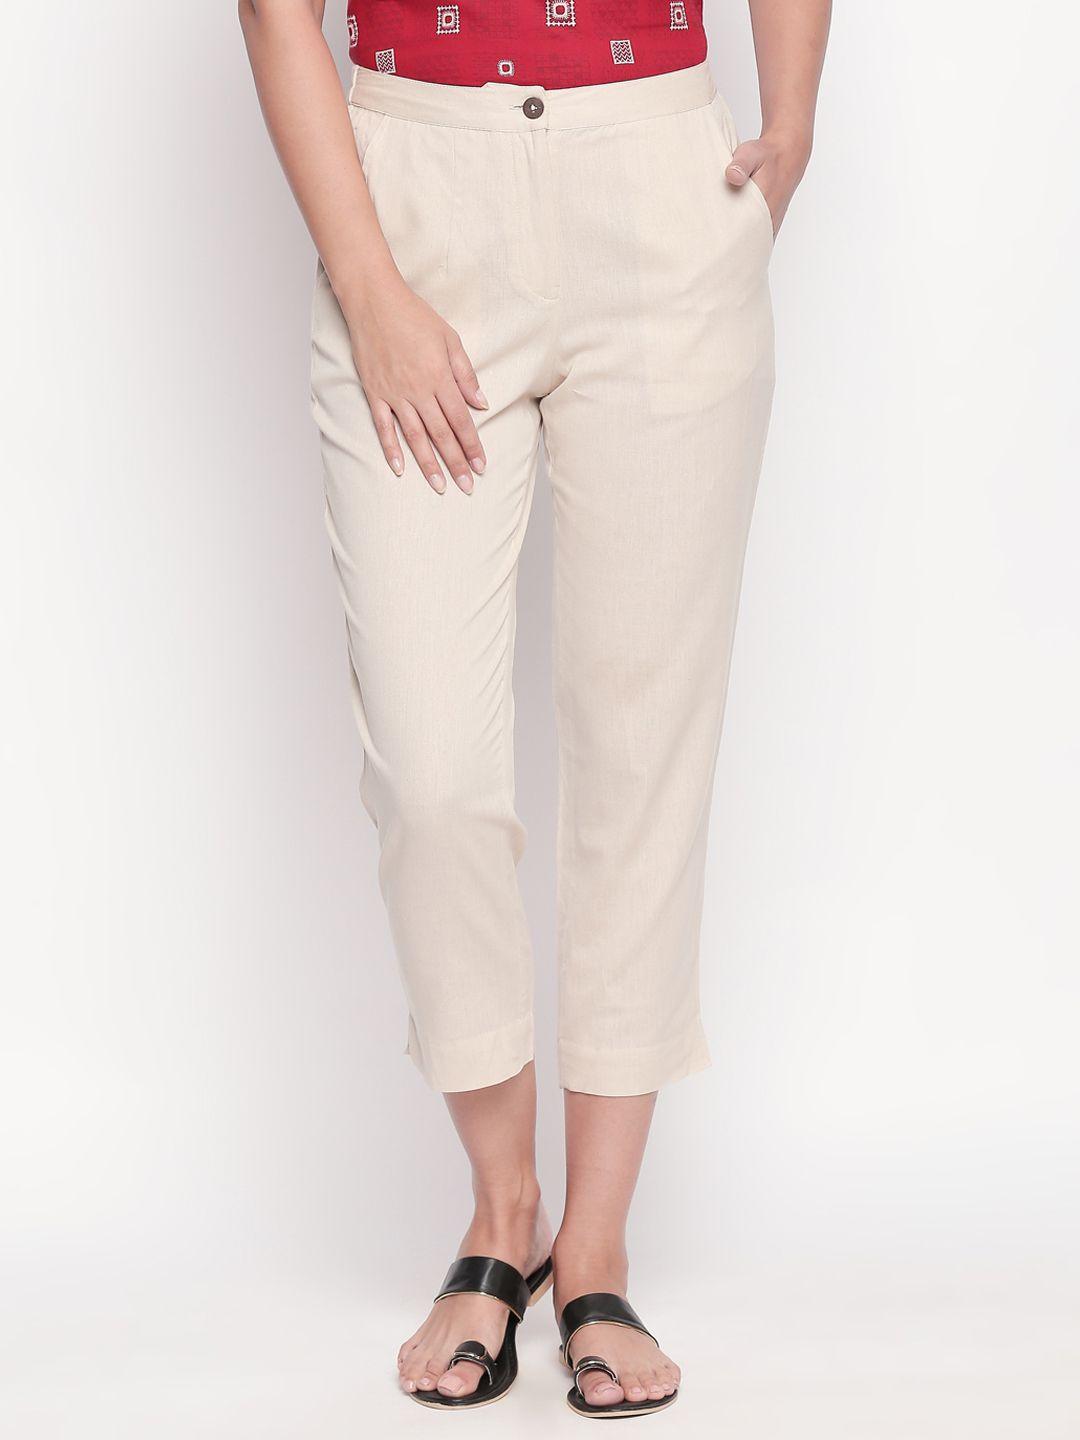 akkriti by pantaloons women off-white regular fit solid peg trousers